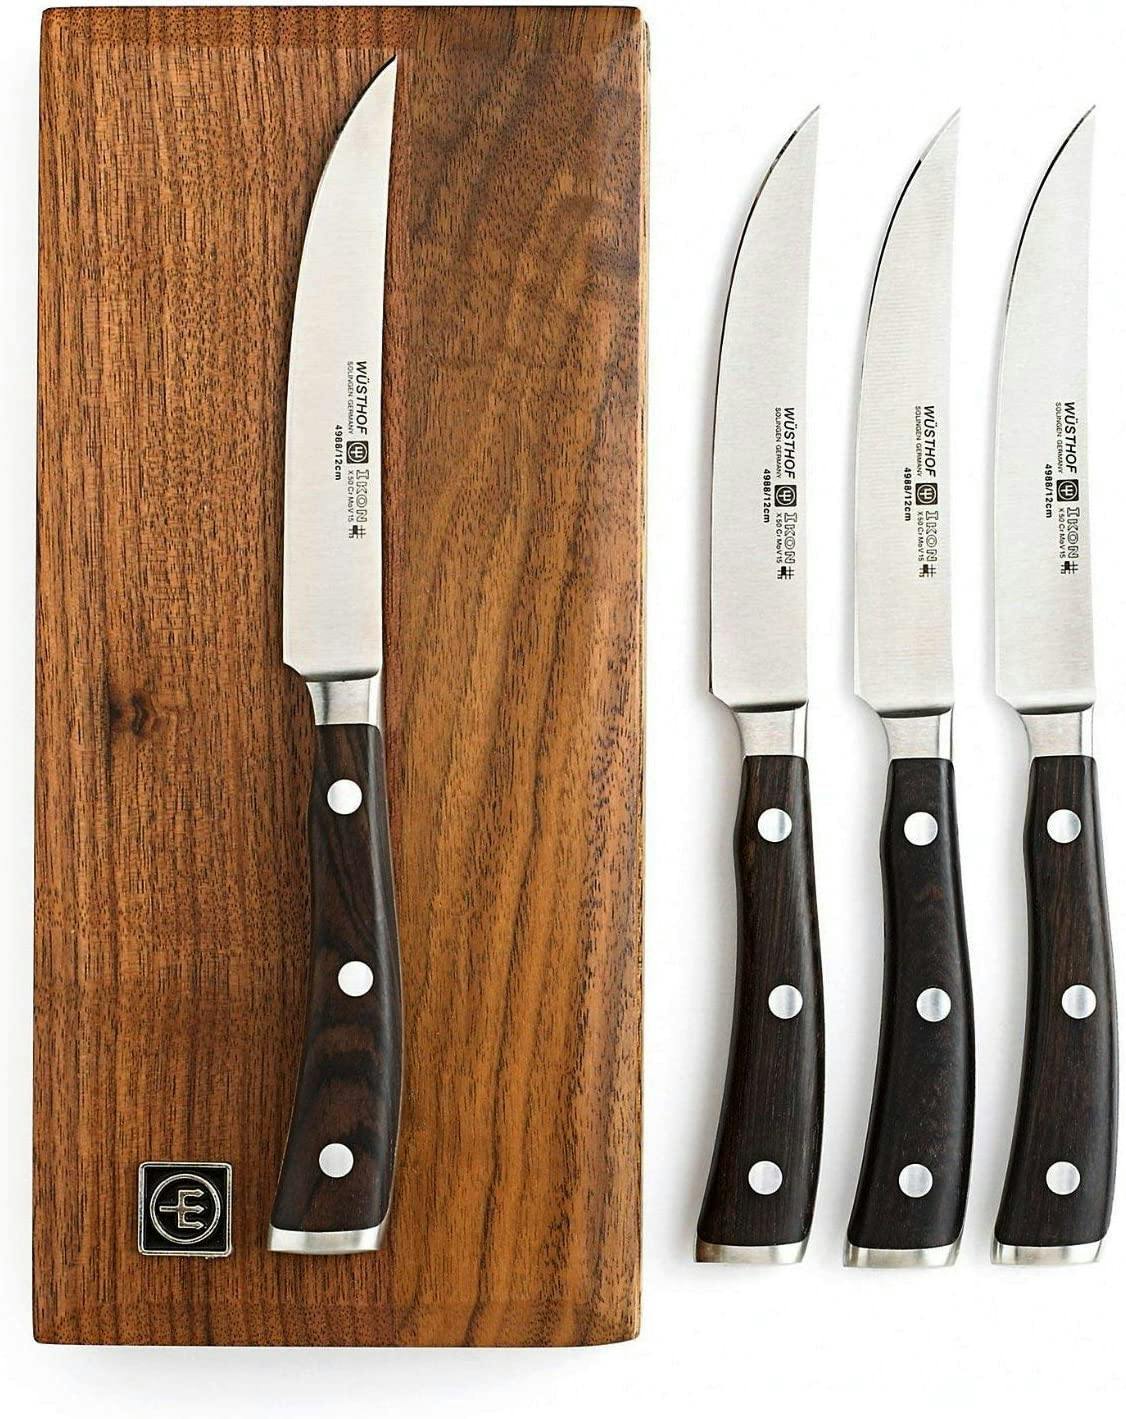 Wusthof Classic Ikon 6 Piece Steak Knife Set with Wood Case (Black Handles)